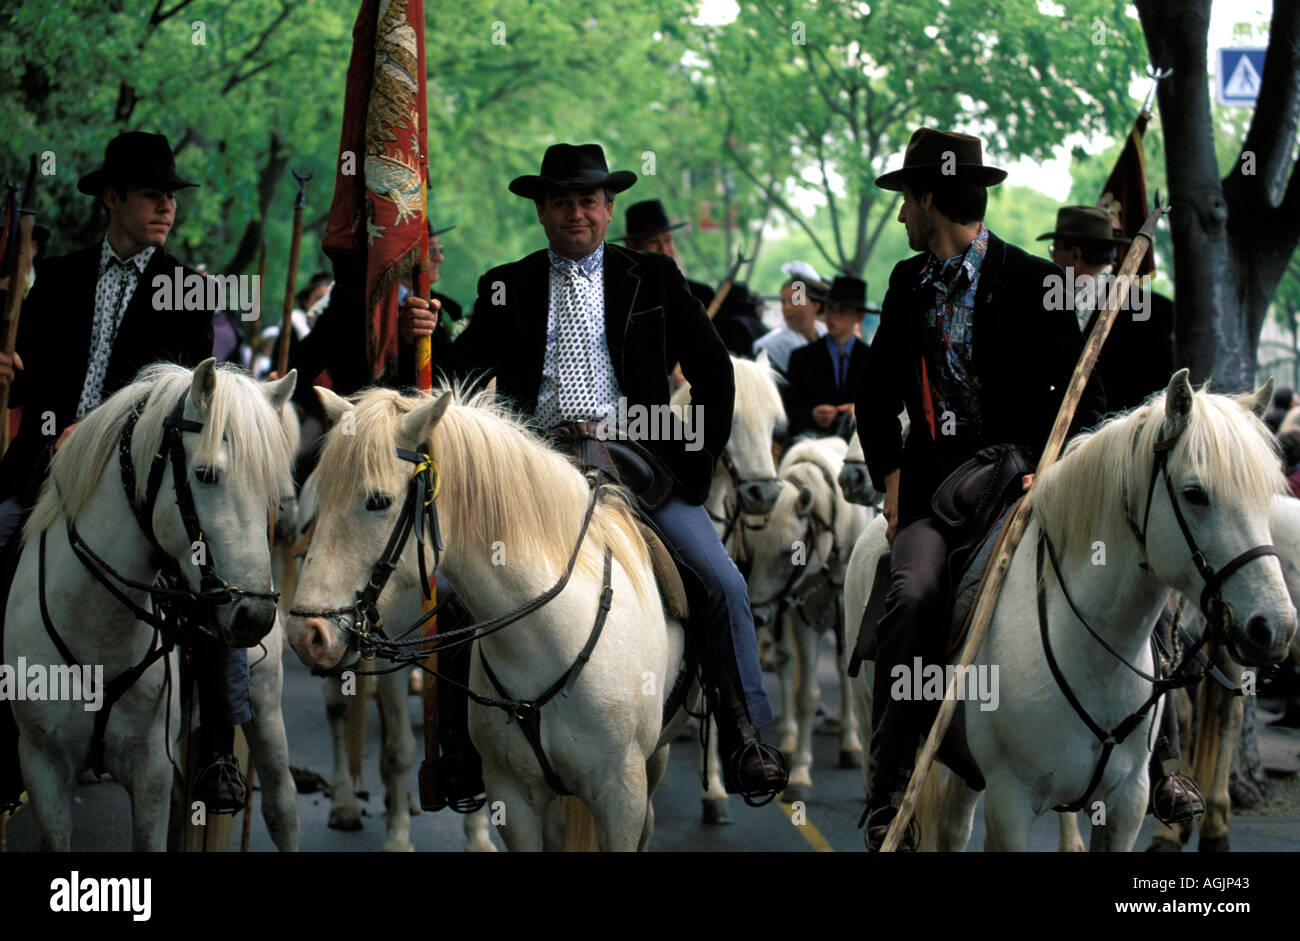 Arles gardians on horseback parading at the Fete des Gardians festival Stock Photo